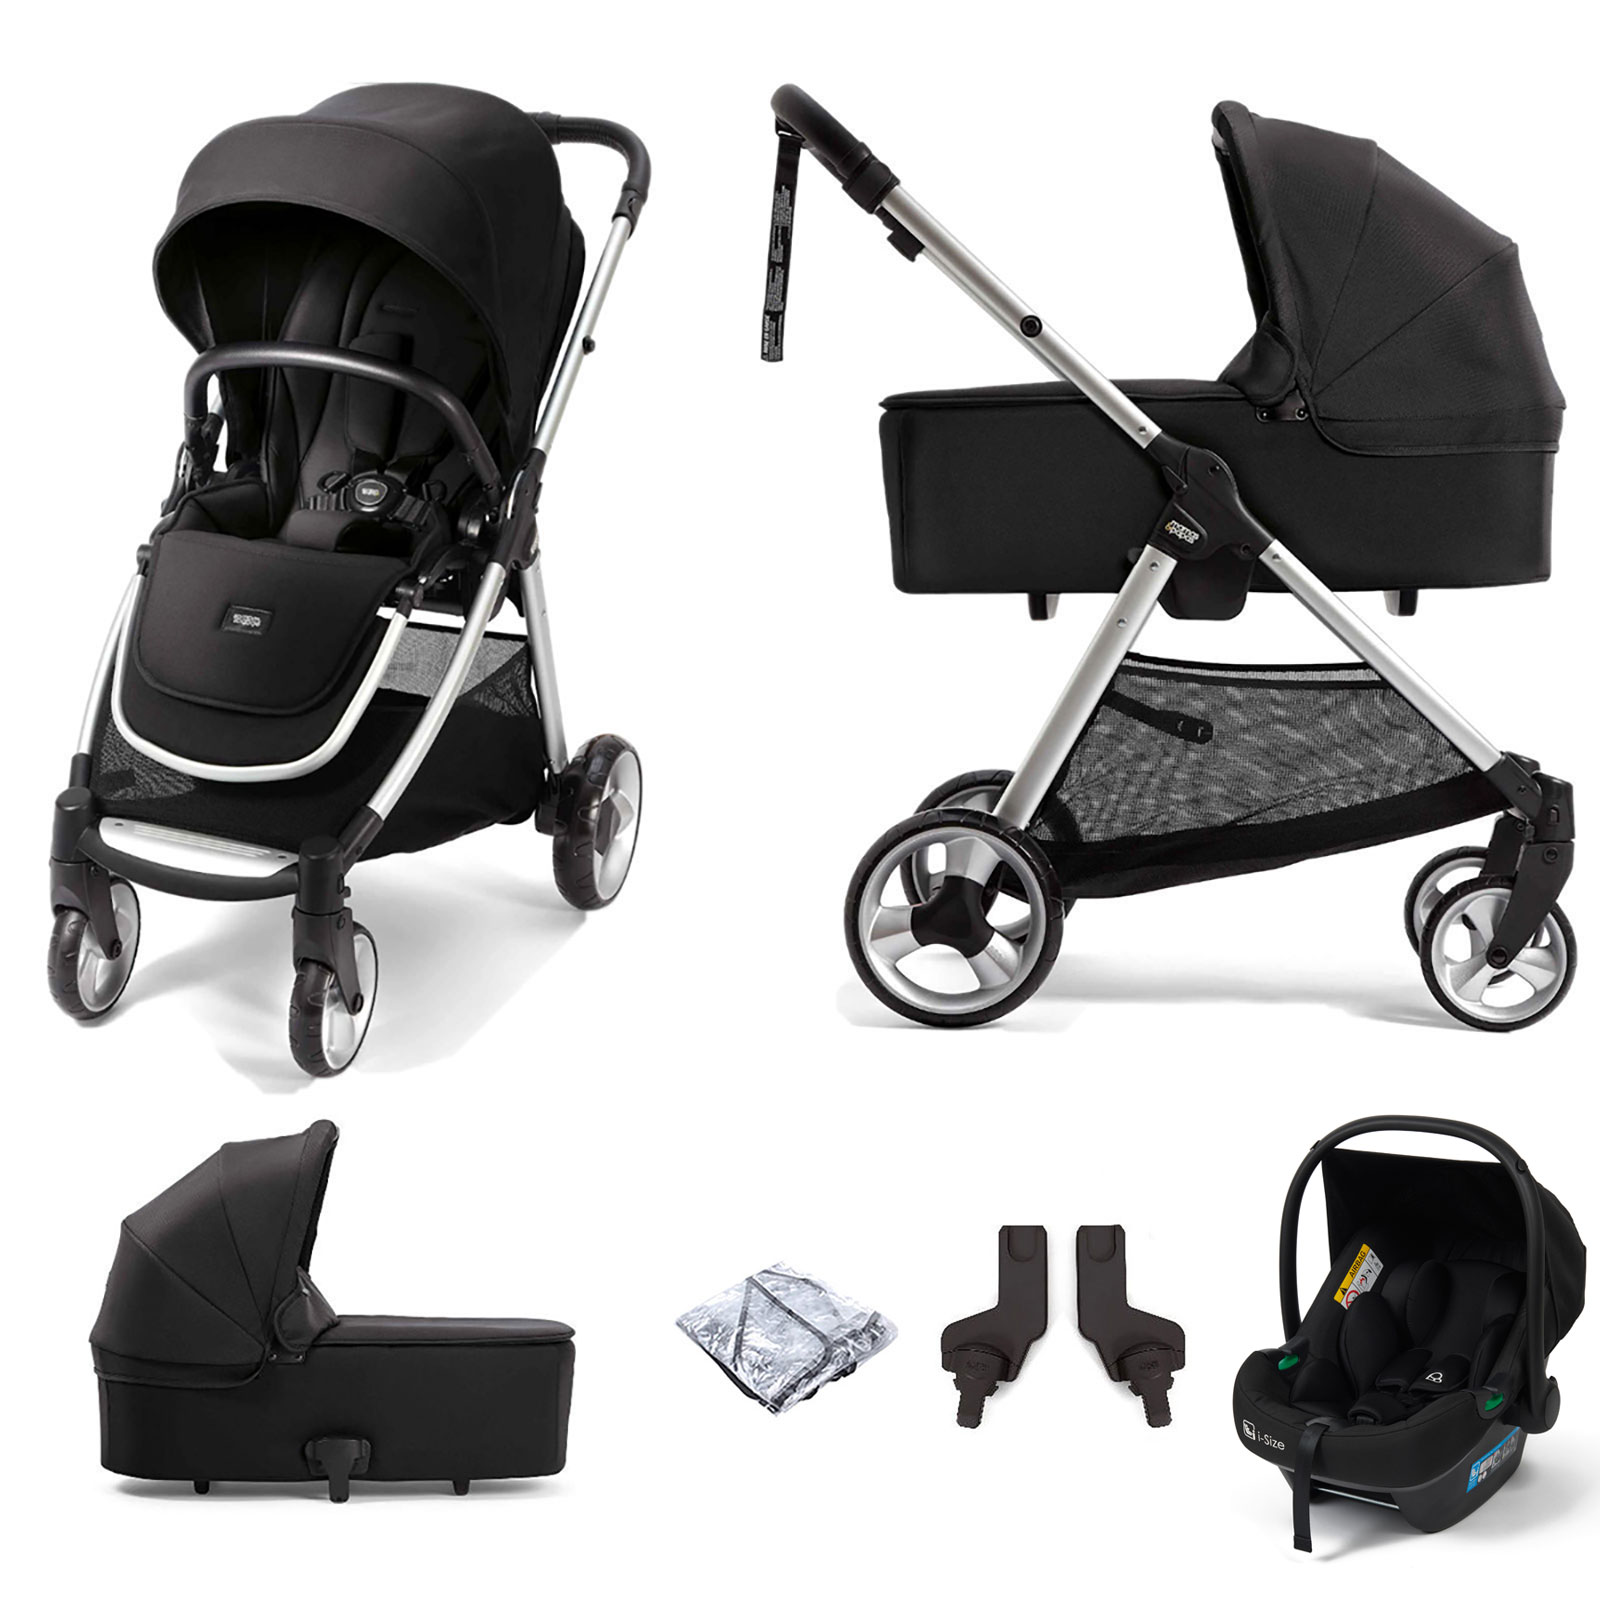 Mamas & Papas Flip XT2 (Safe Fit Car Seat) Travel System with Carrycot - Black